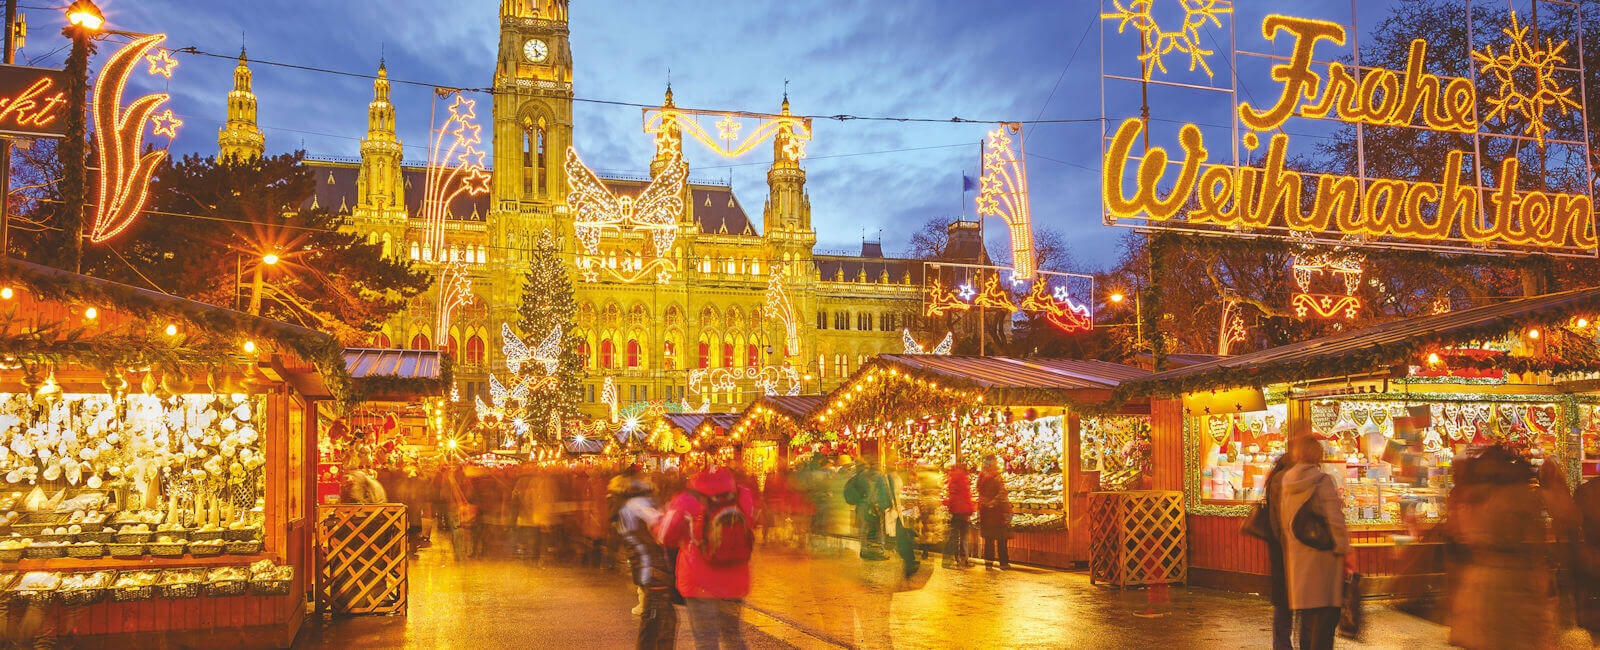 vienna christmas market